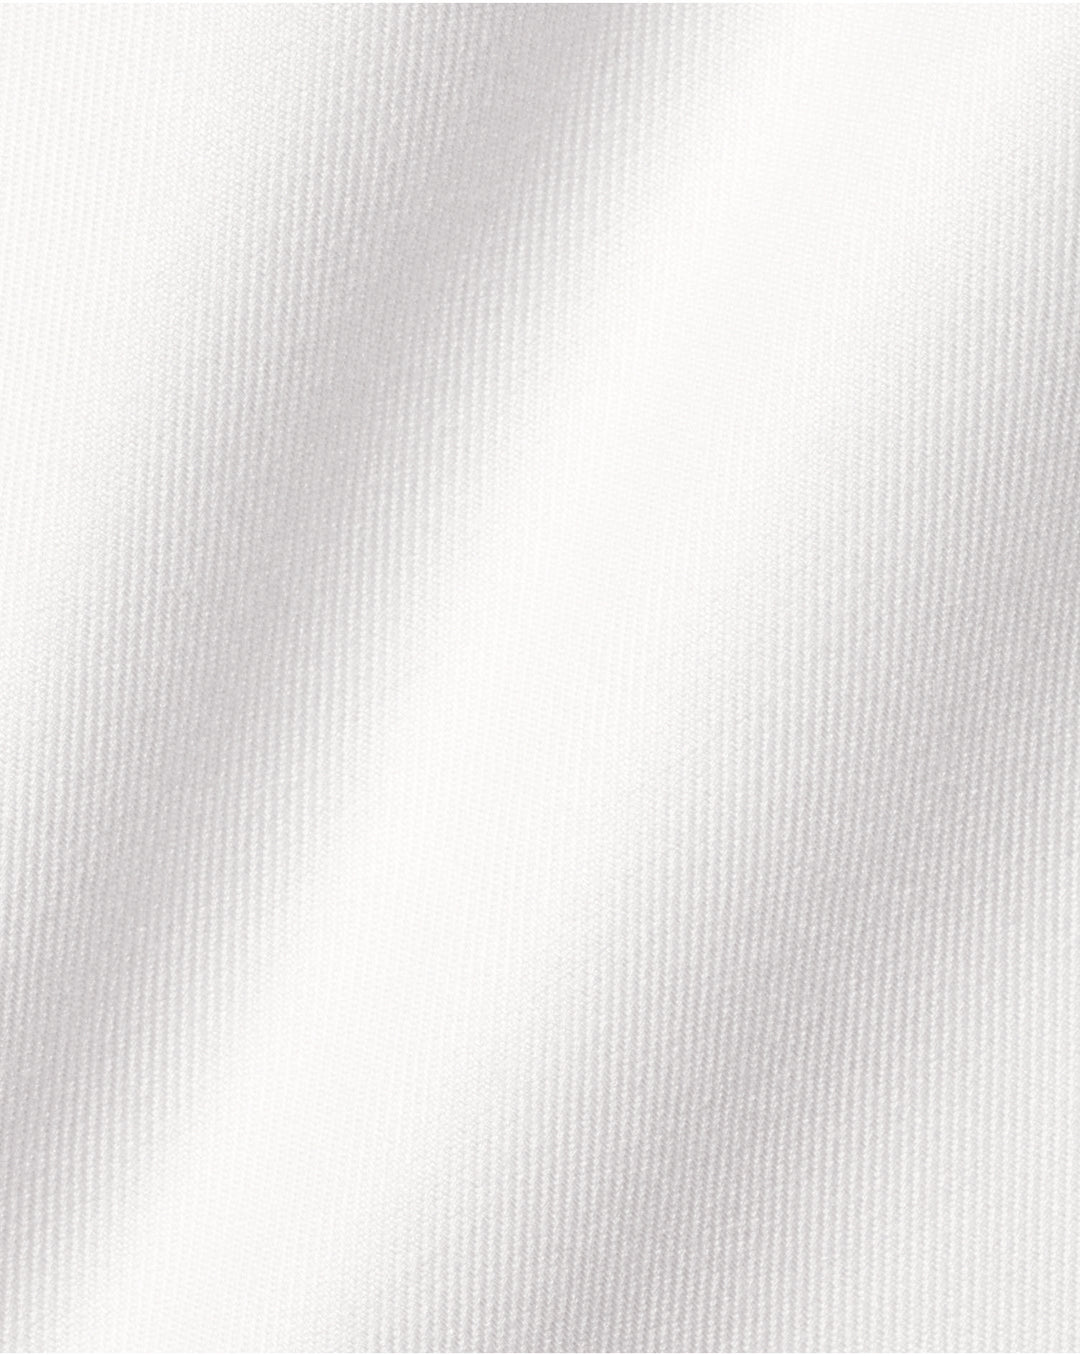 White Non Iron Twill Cutaway Slim Fit Shirt FON0540WHT